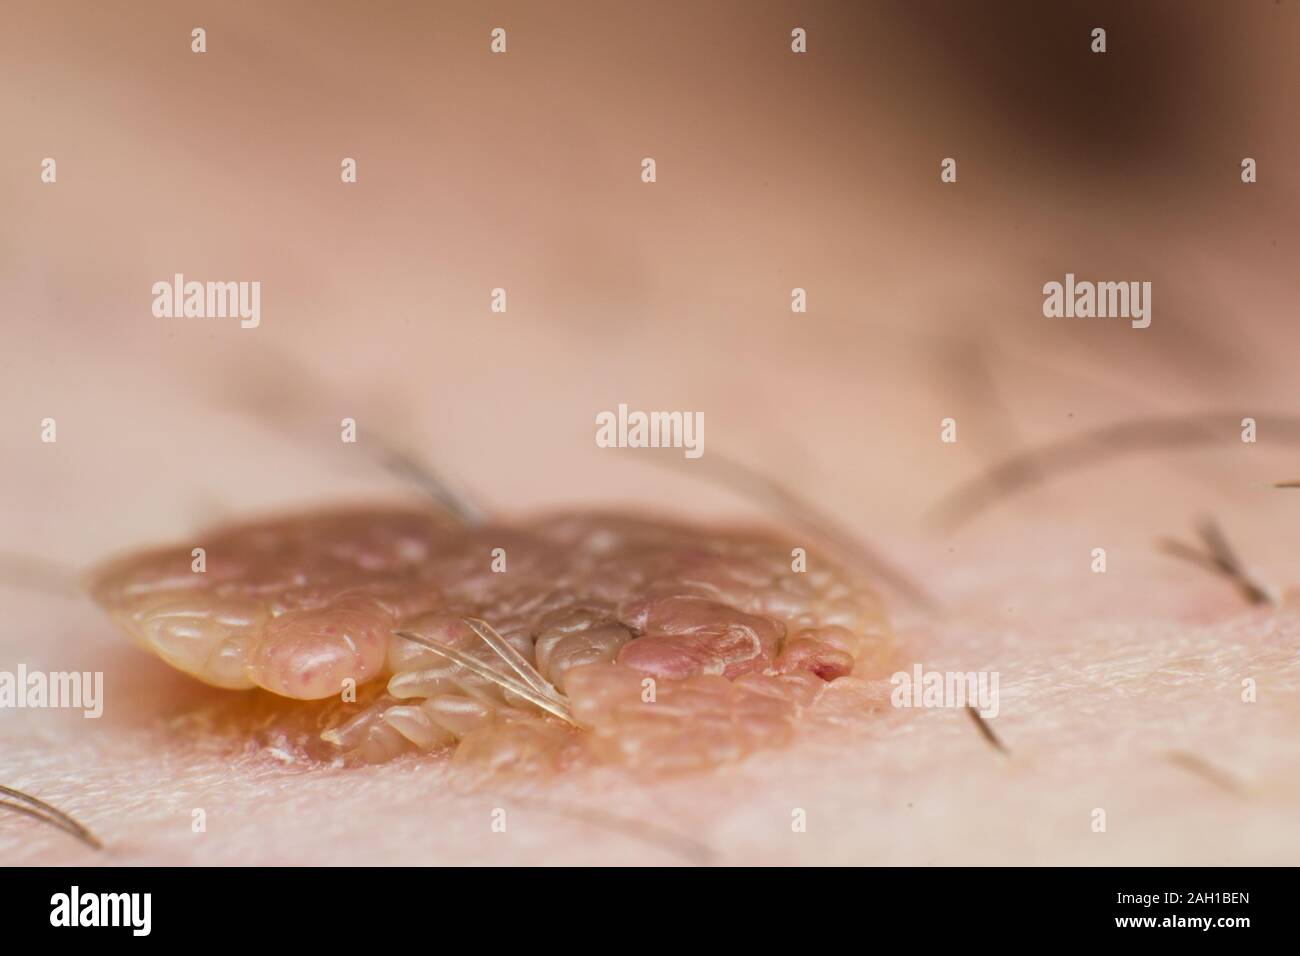 Macro photo of a skin wart, papilloma virus infection Stock Photo